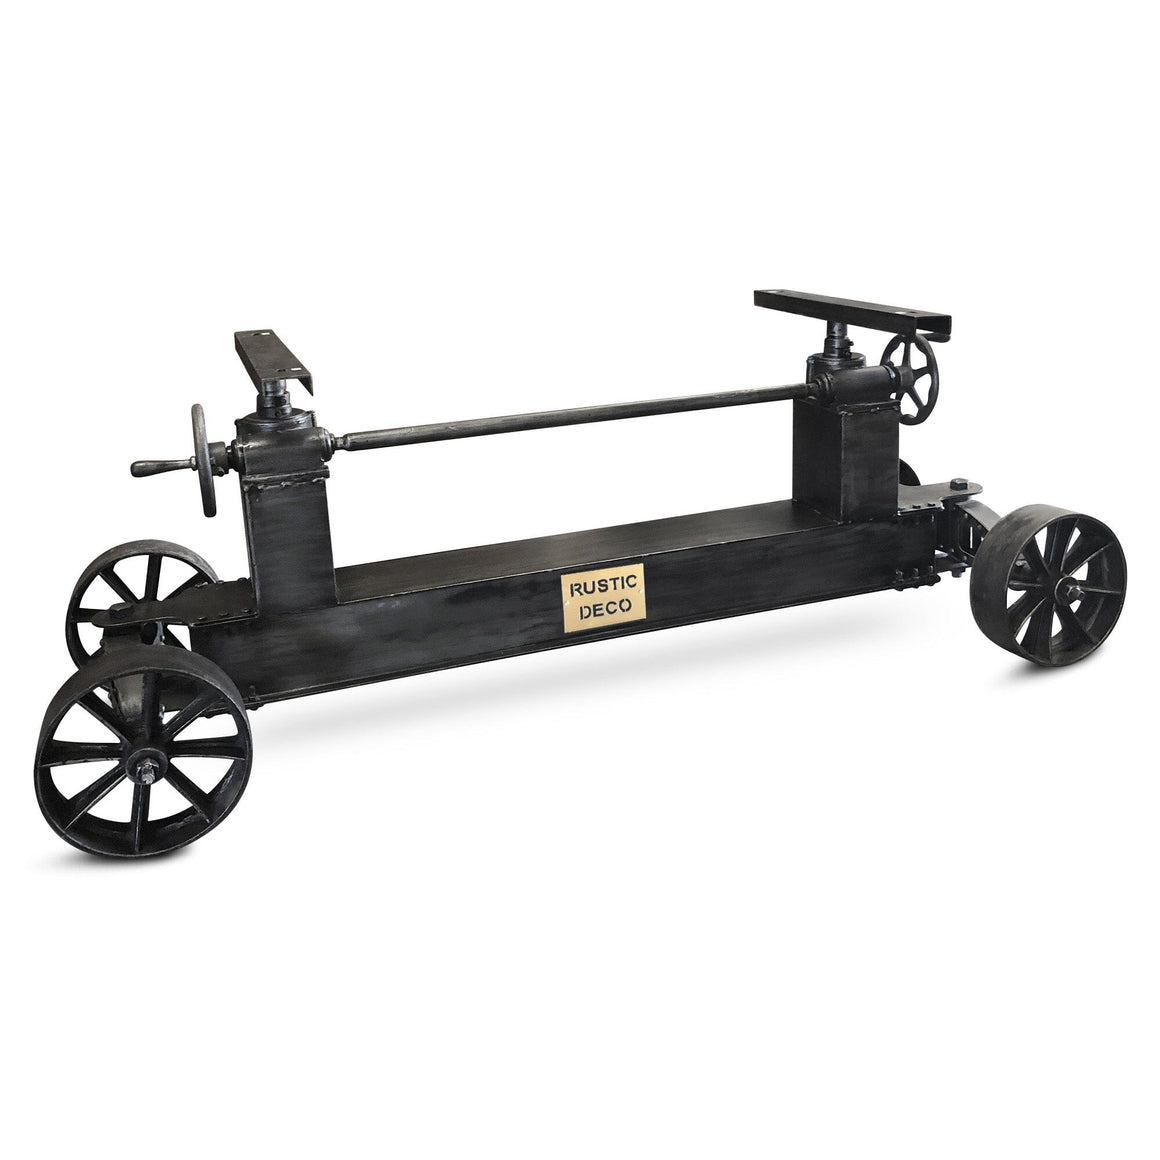 Industrial Trolley Table Desk Base - Iron Wheels - Adjustable Height - DIY DIY Rustic Deco